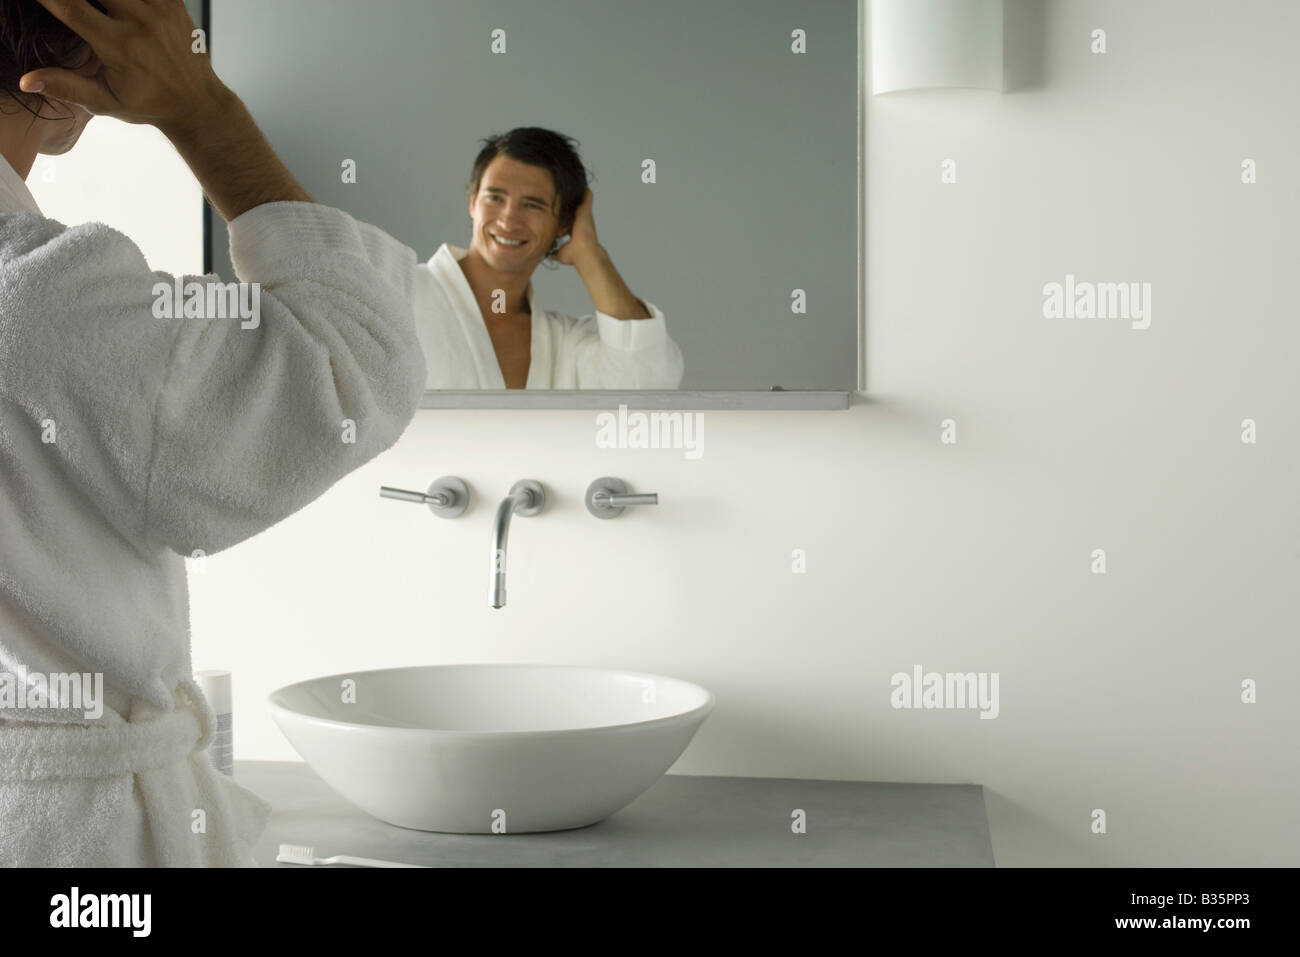 Man in bathrobe looking at self in bathroom mirror, hand in hair Stock Photo